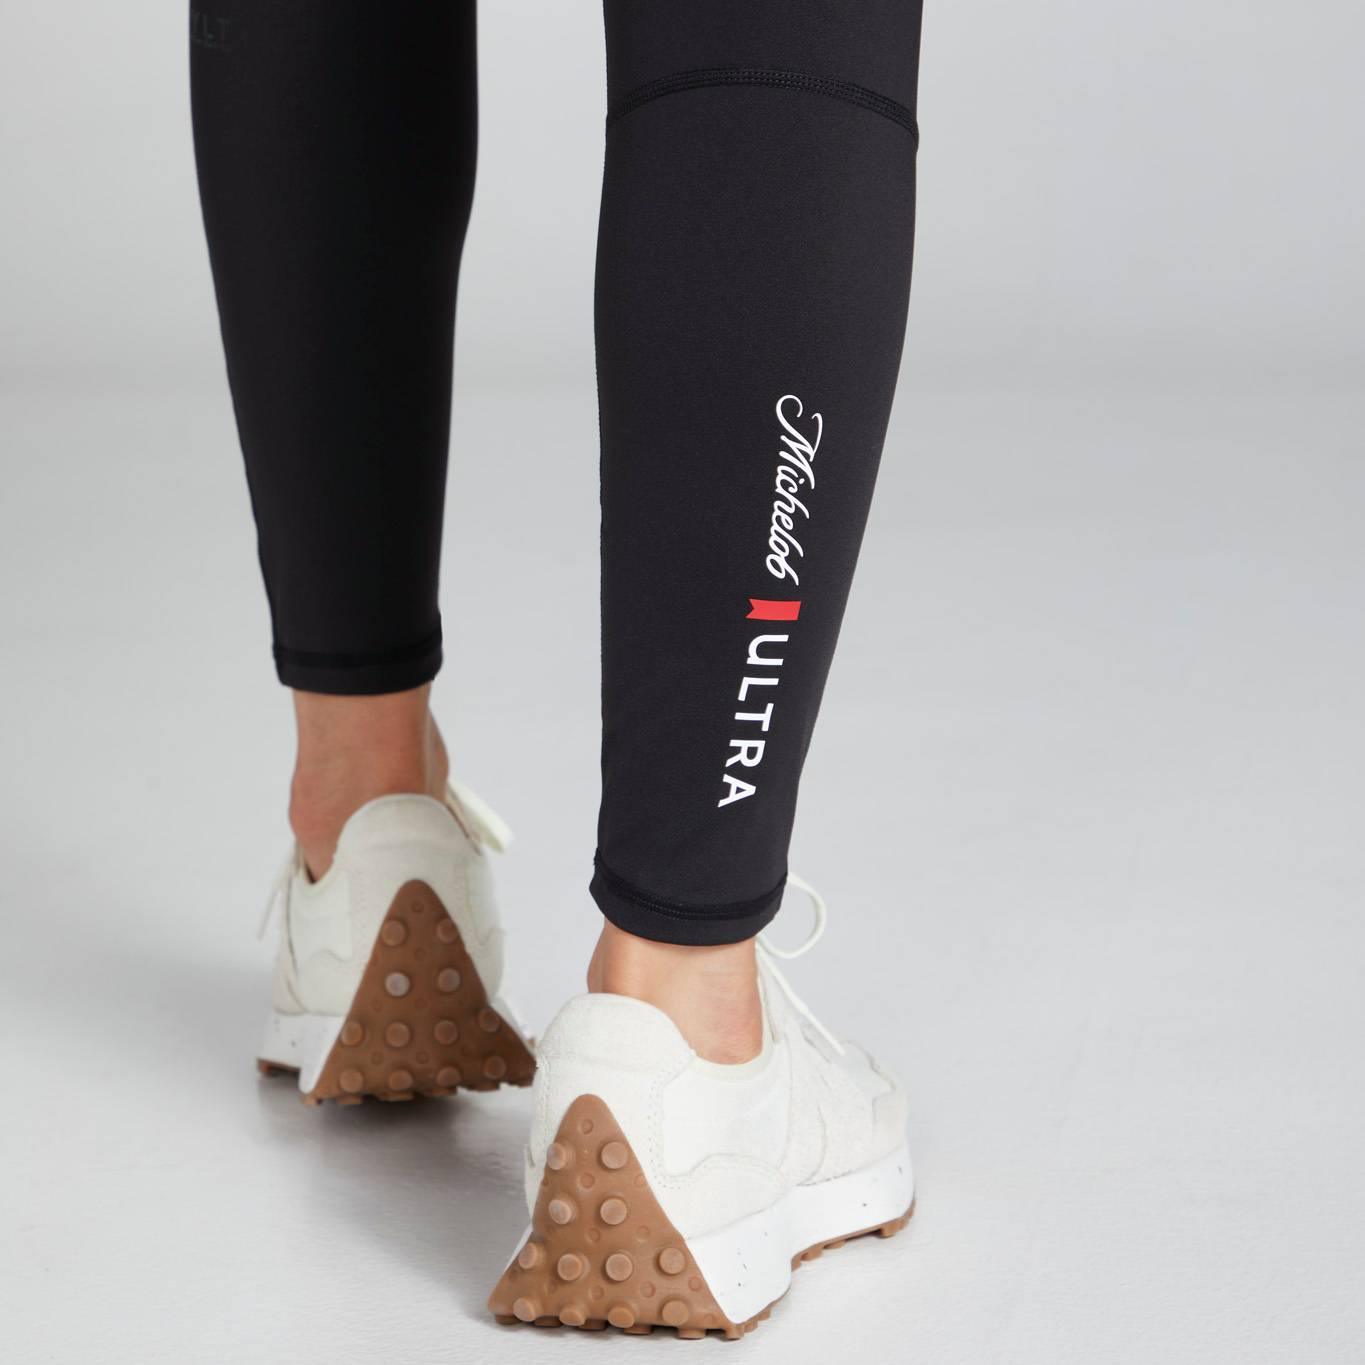 back left leg of leggings features Michelob ULTRA logo